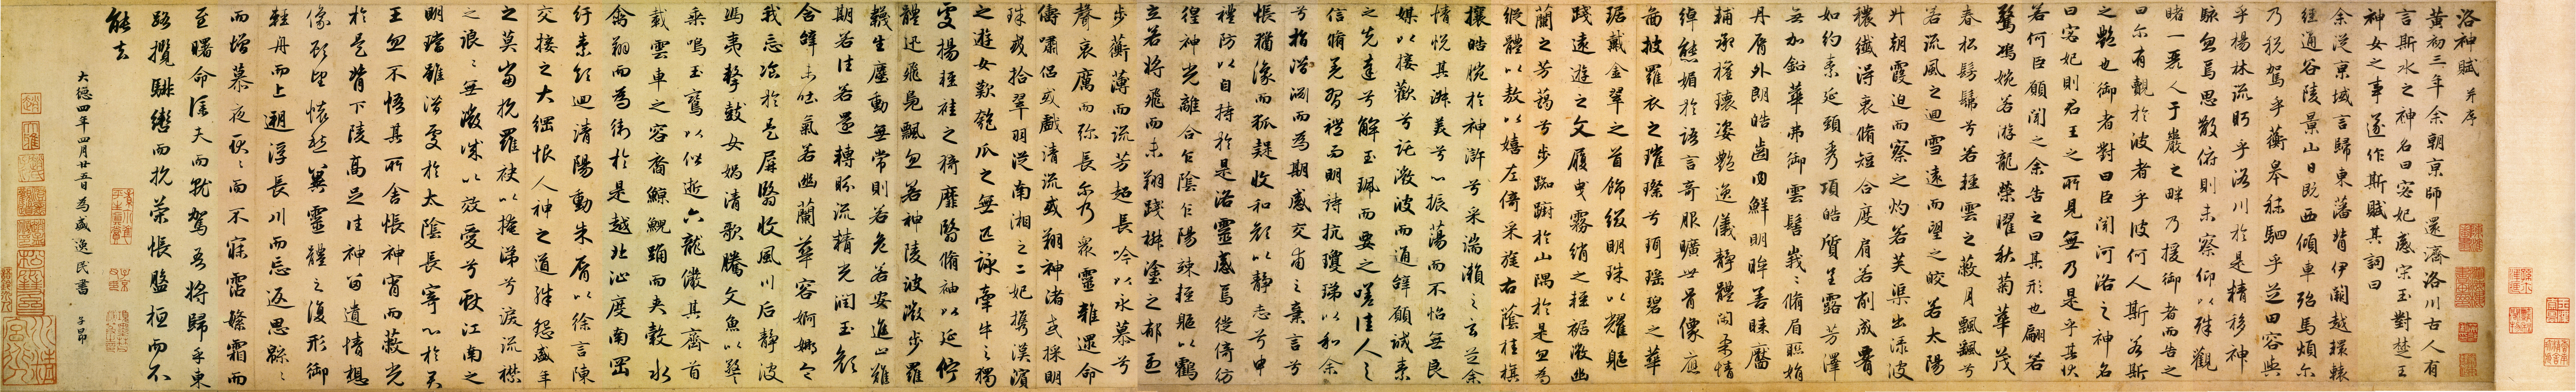 General 16800x2554 kanji calligraphy Asia Zhao Mengfu digital art simple background